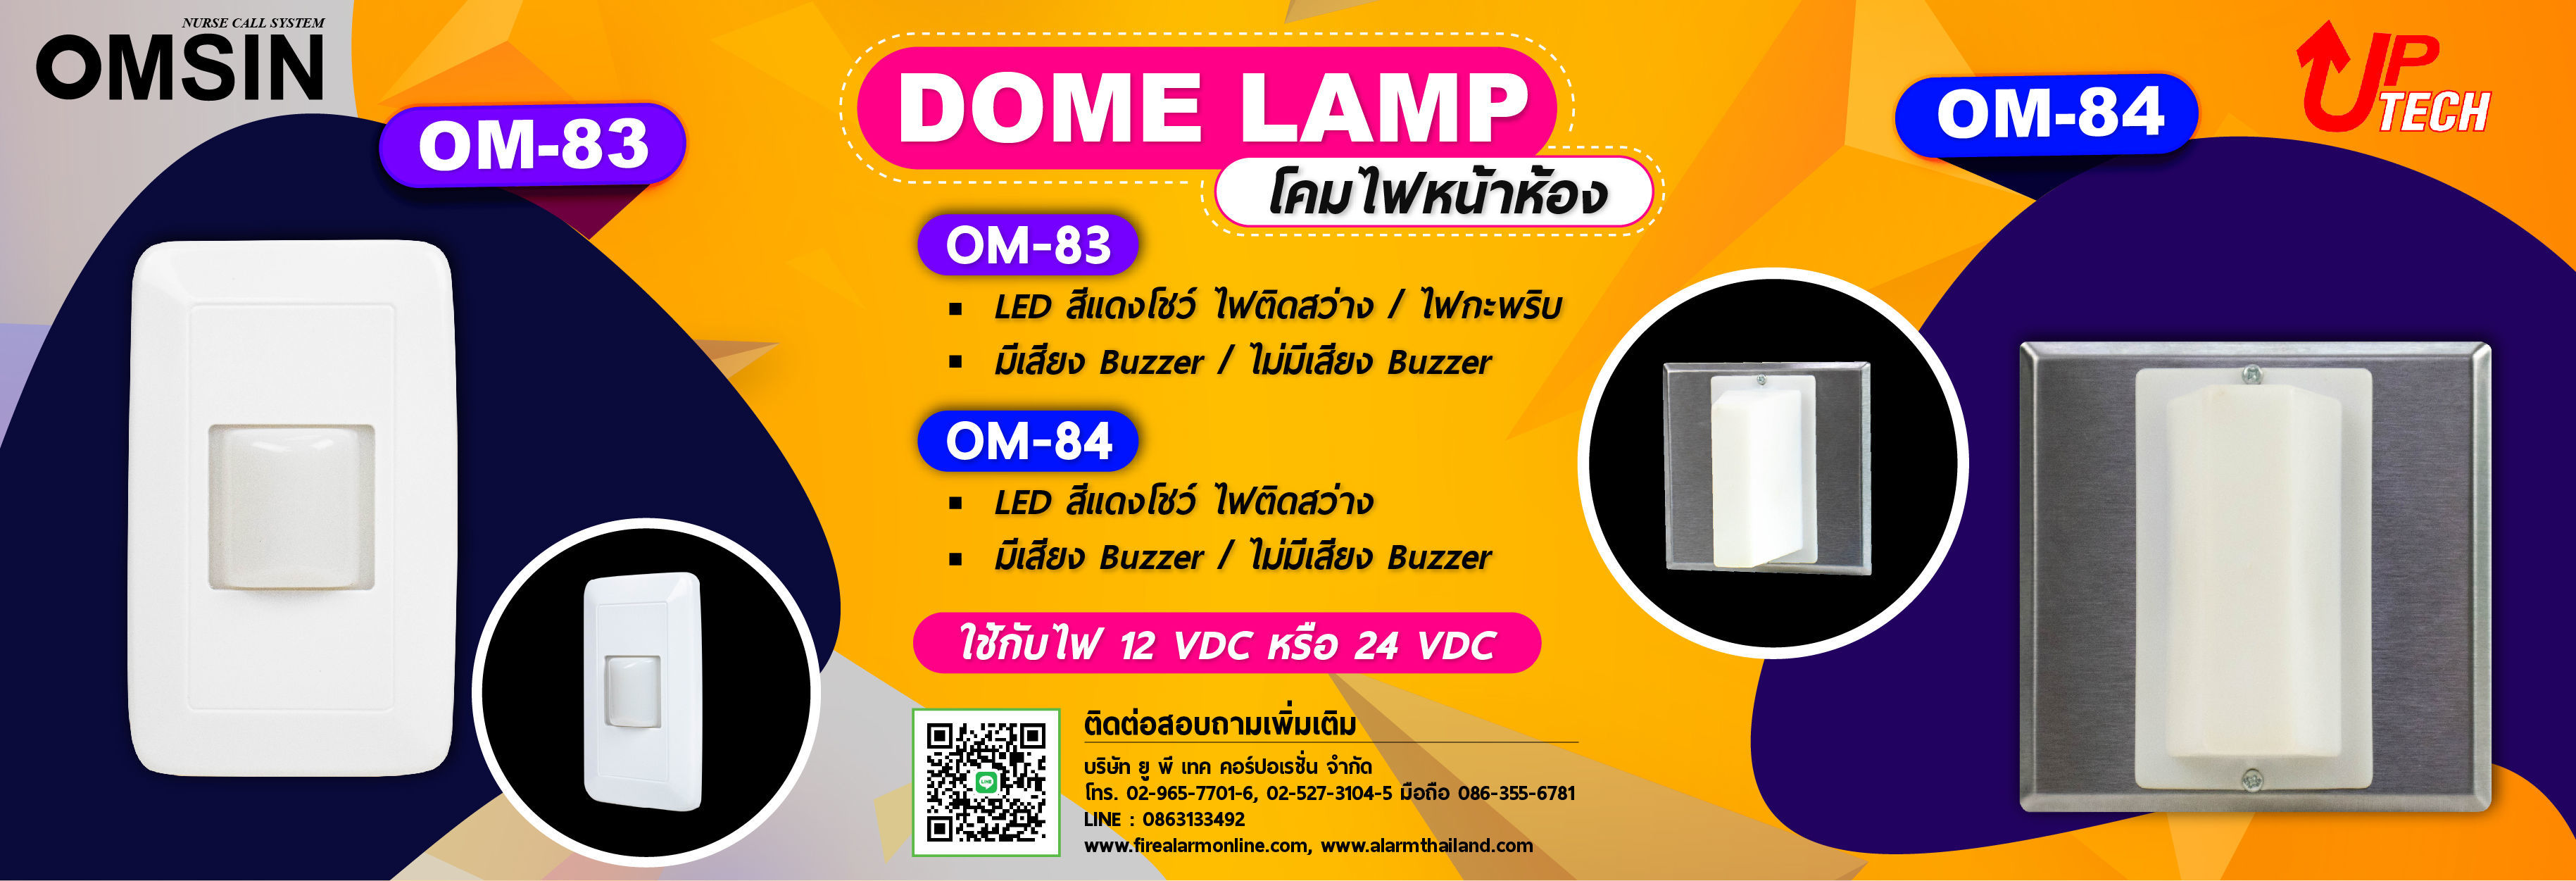 OM-83 / OM-84 Dome Lamp (โคมไฟหน้าห้อง) ยี่ห้อ OMSIN 